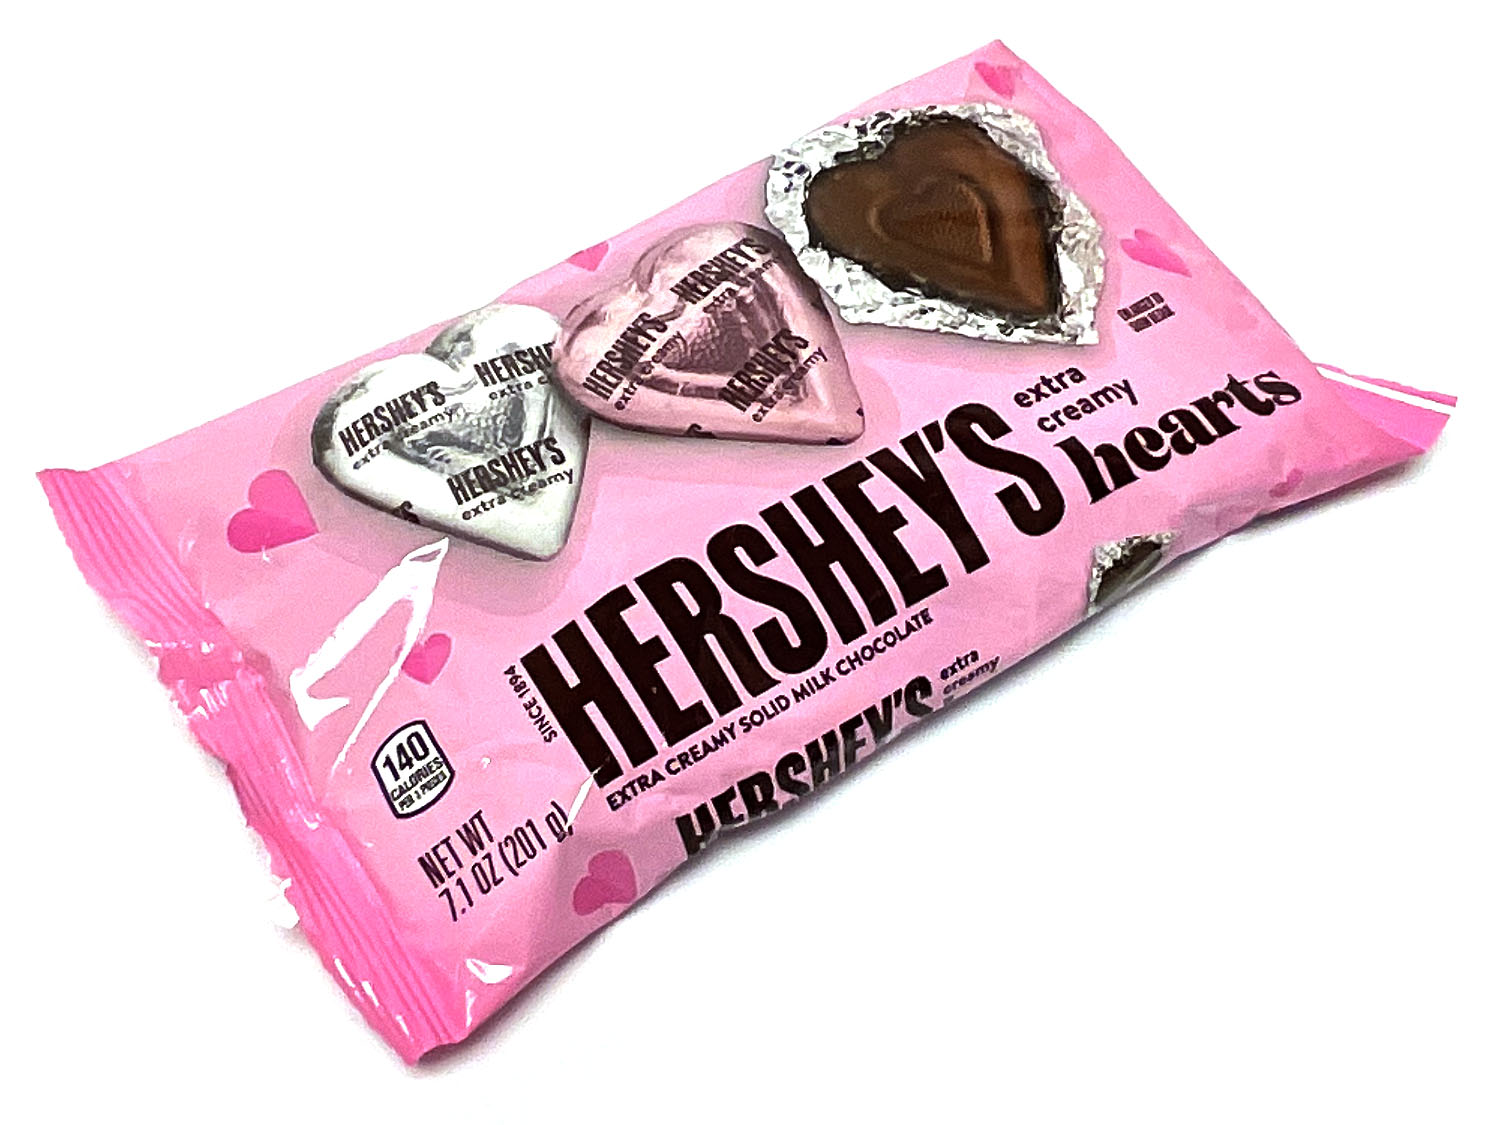 Hershey's Hearts - 7.1 oz bag